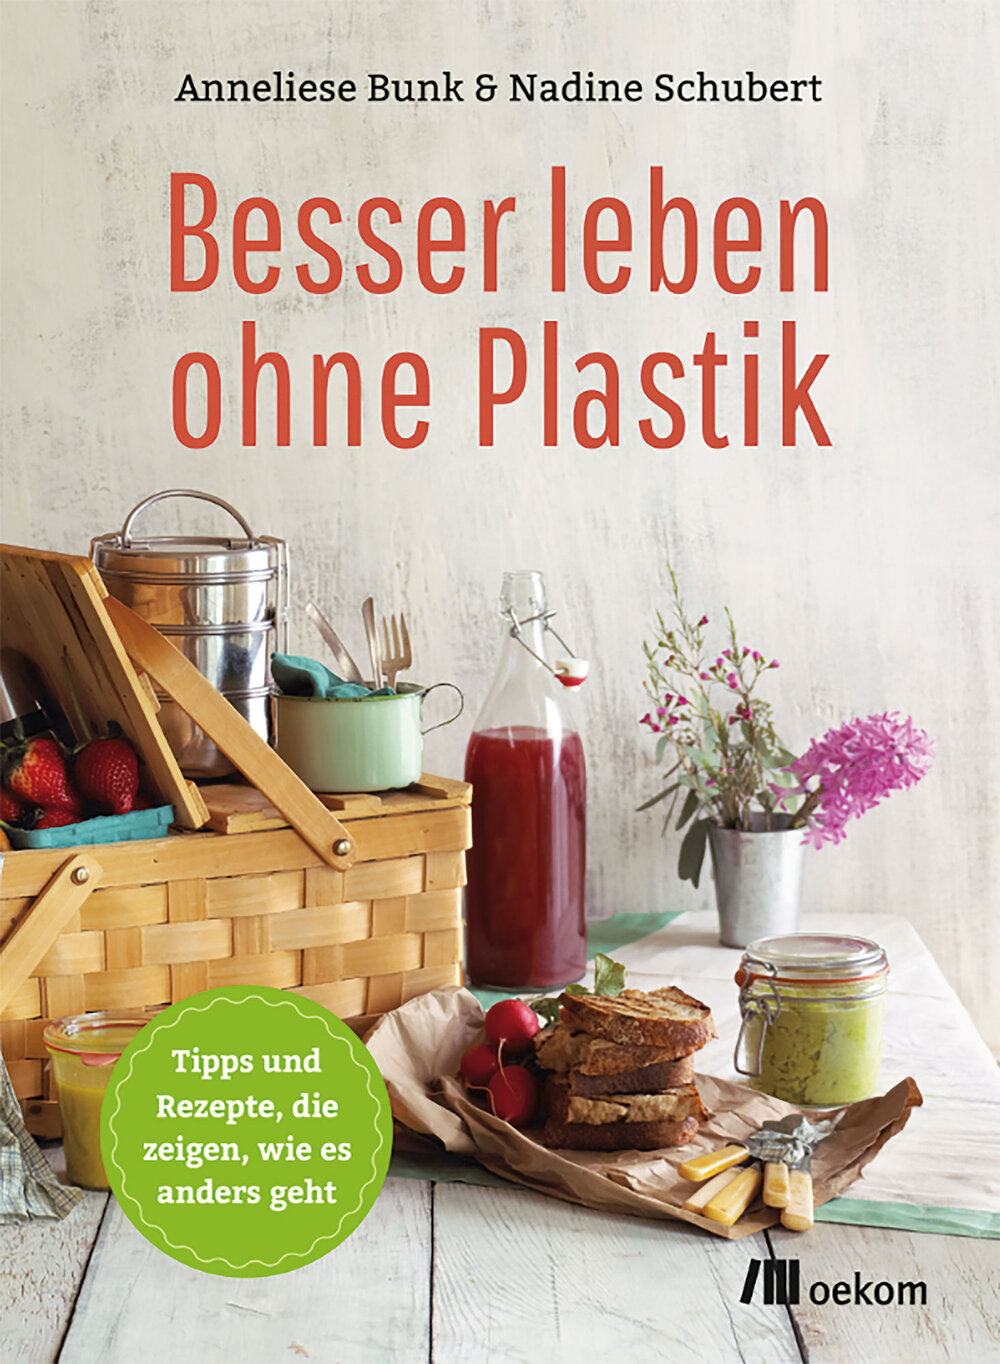 „Besser leben ohne Plastik“ – A. Bunk & N. Schubert